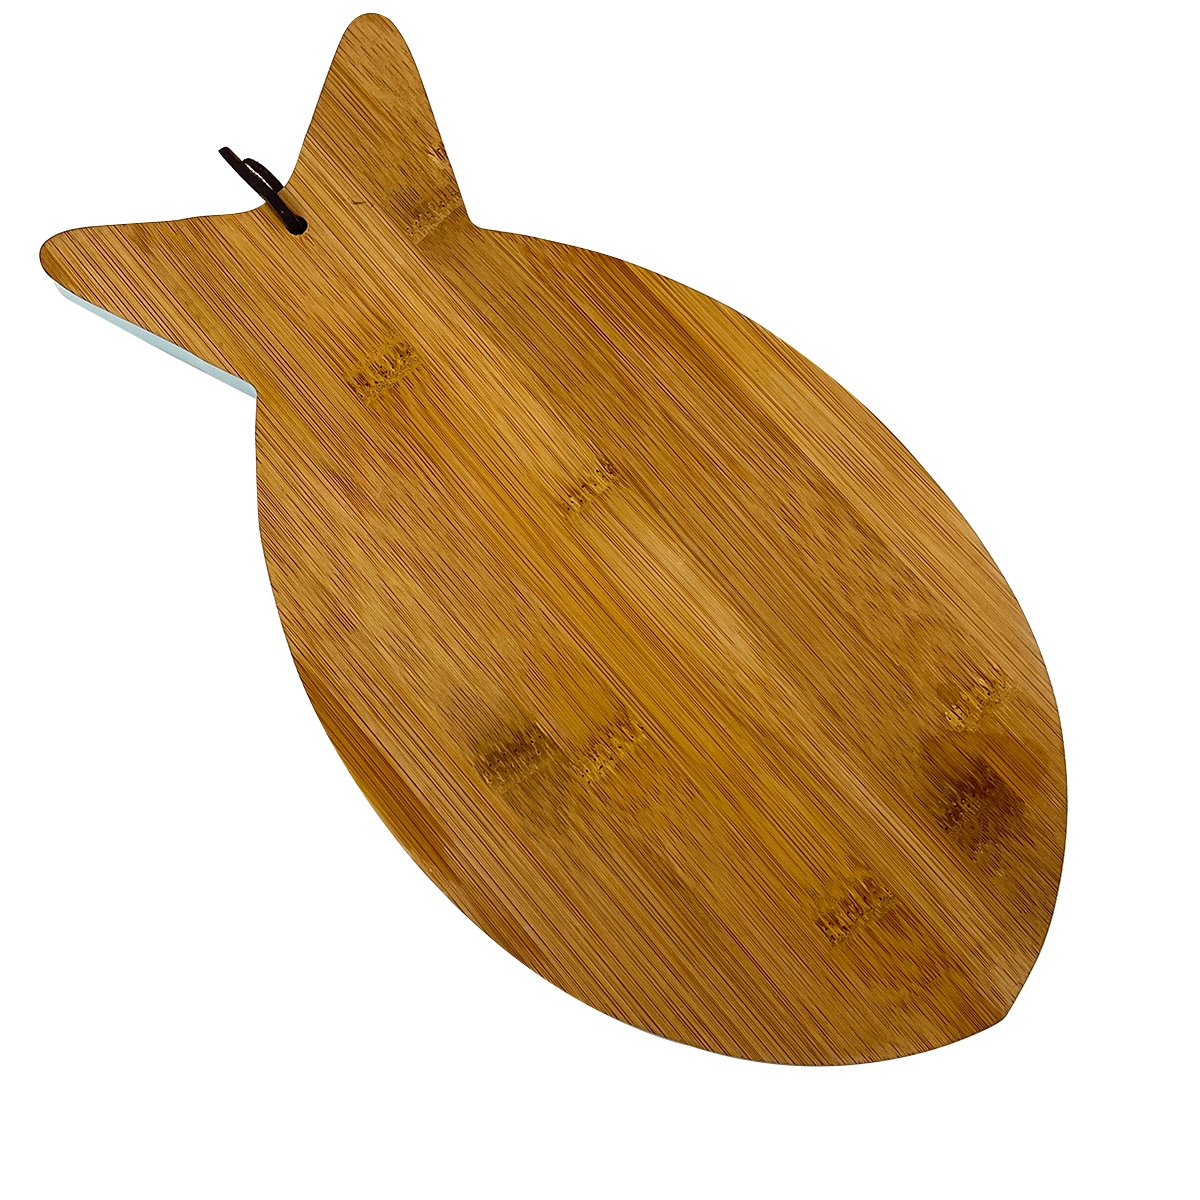 Tabla de cortar de madera de bambú Natural tabla de cortar de cocina en forma de pez tablas de servir de charcutería de madera grande